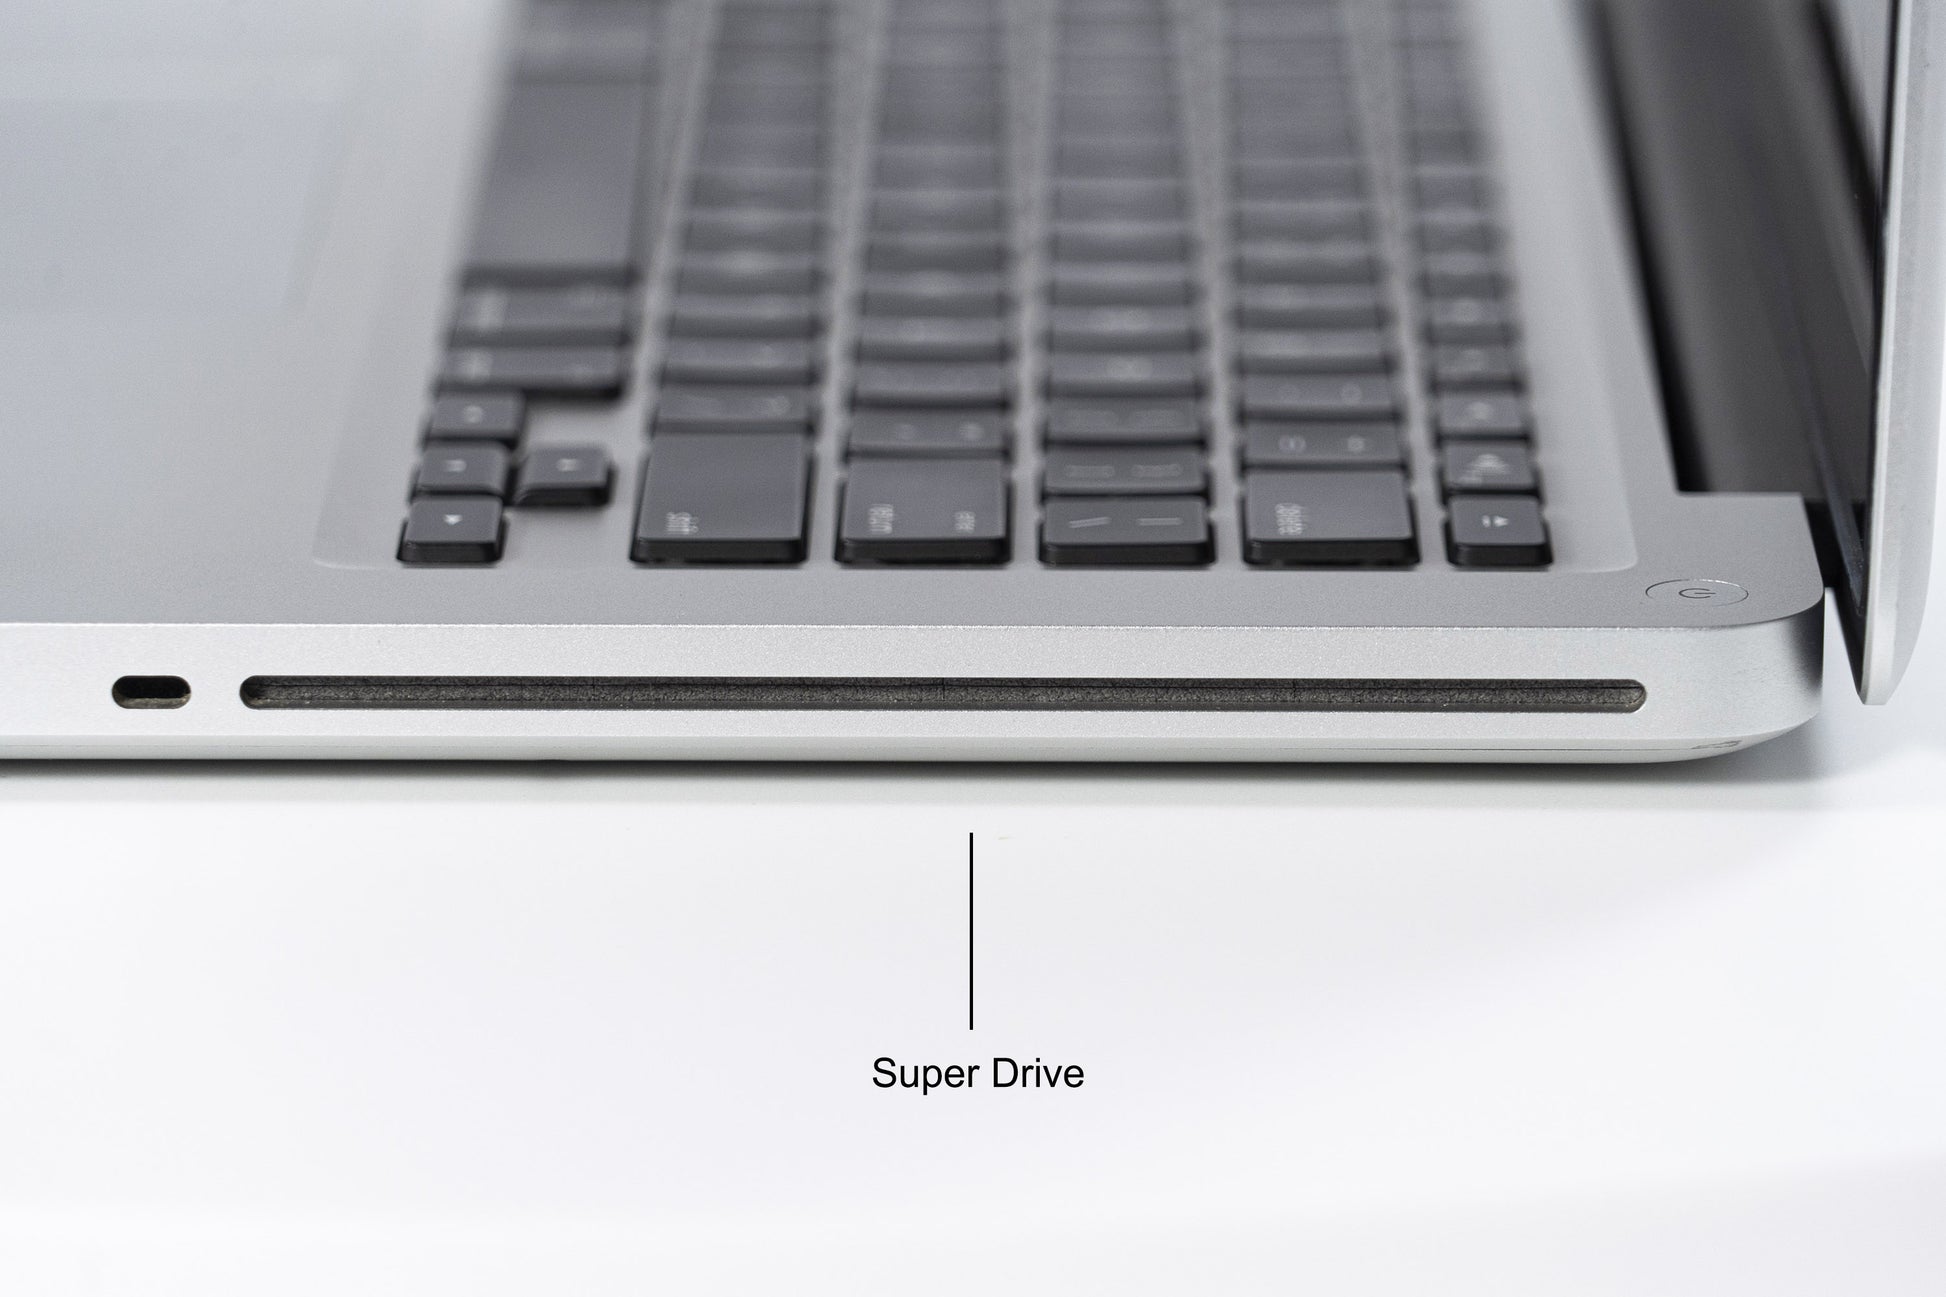 Apple MacBook Pro (15-inch Early 2011) 2.0 GHz 2nd Gen Intel i7 4GB 500GB HDD (Silver)